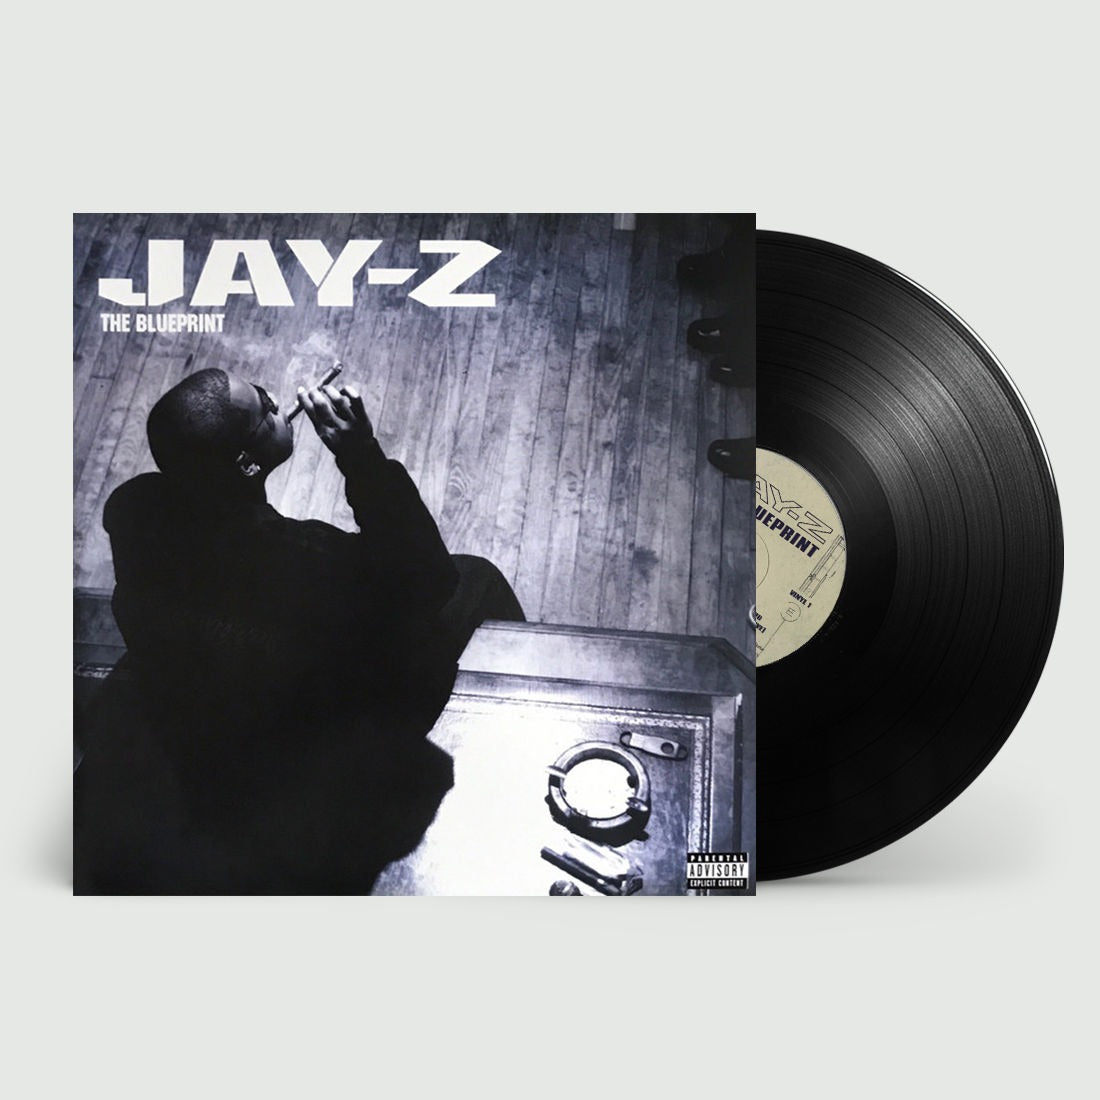 Jay-Z - The Blueprint 2LP (UK Pressing)